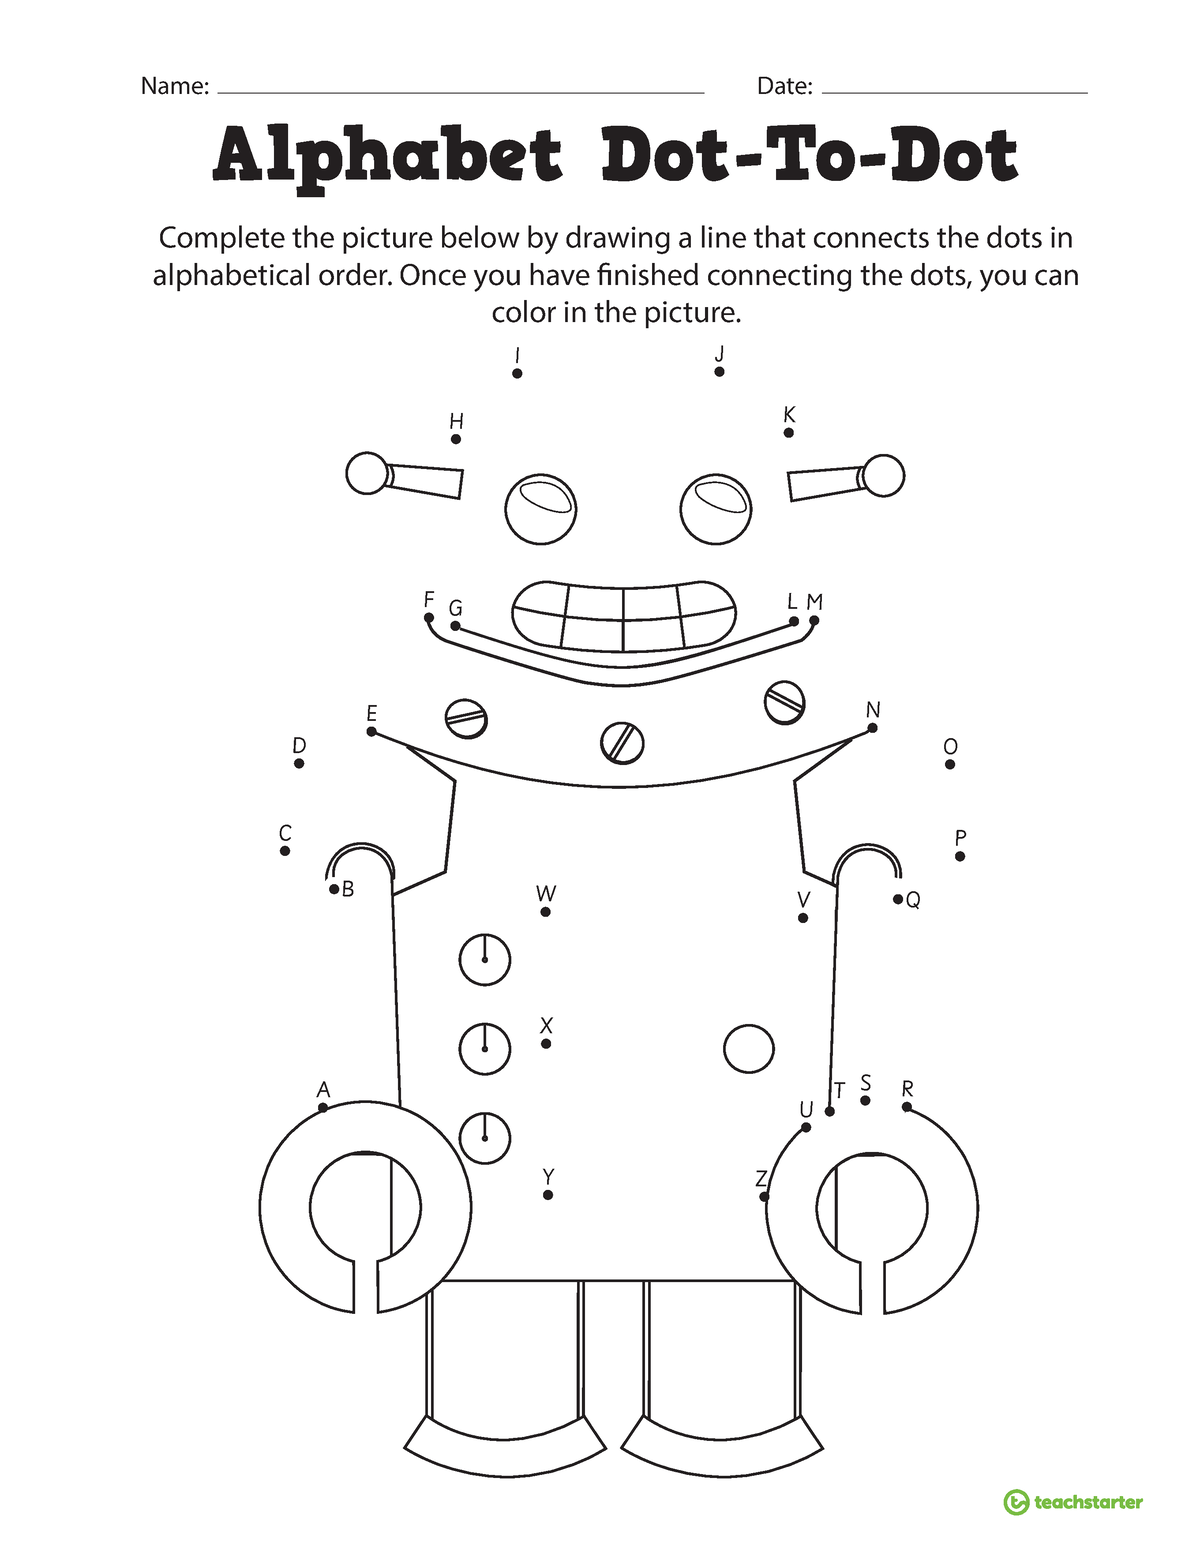 Connectthe Dots Printable Alphabet Worksheet Robot Themed Adobe Reader ...